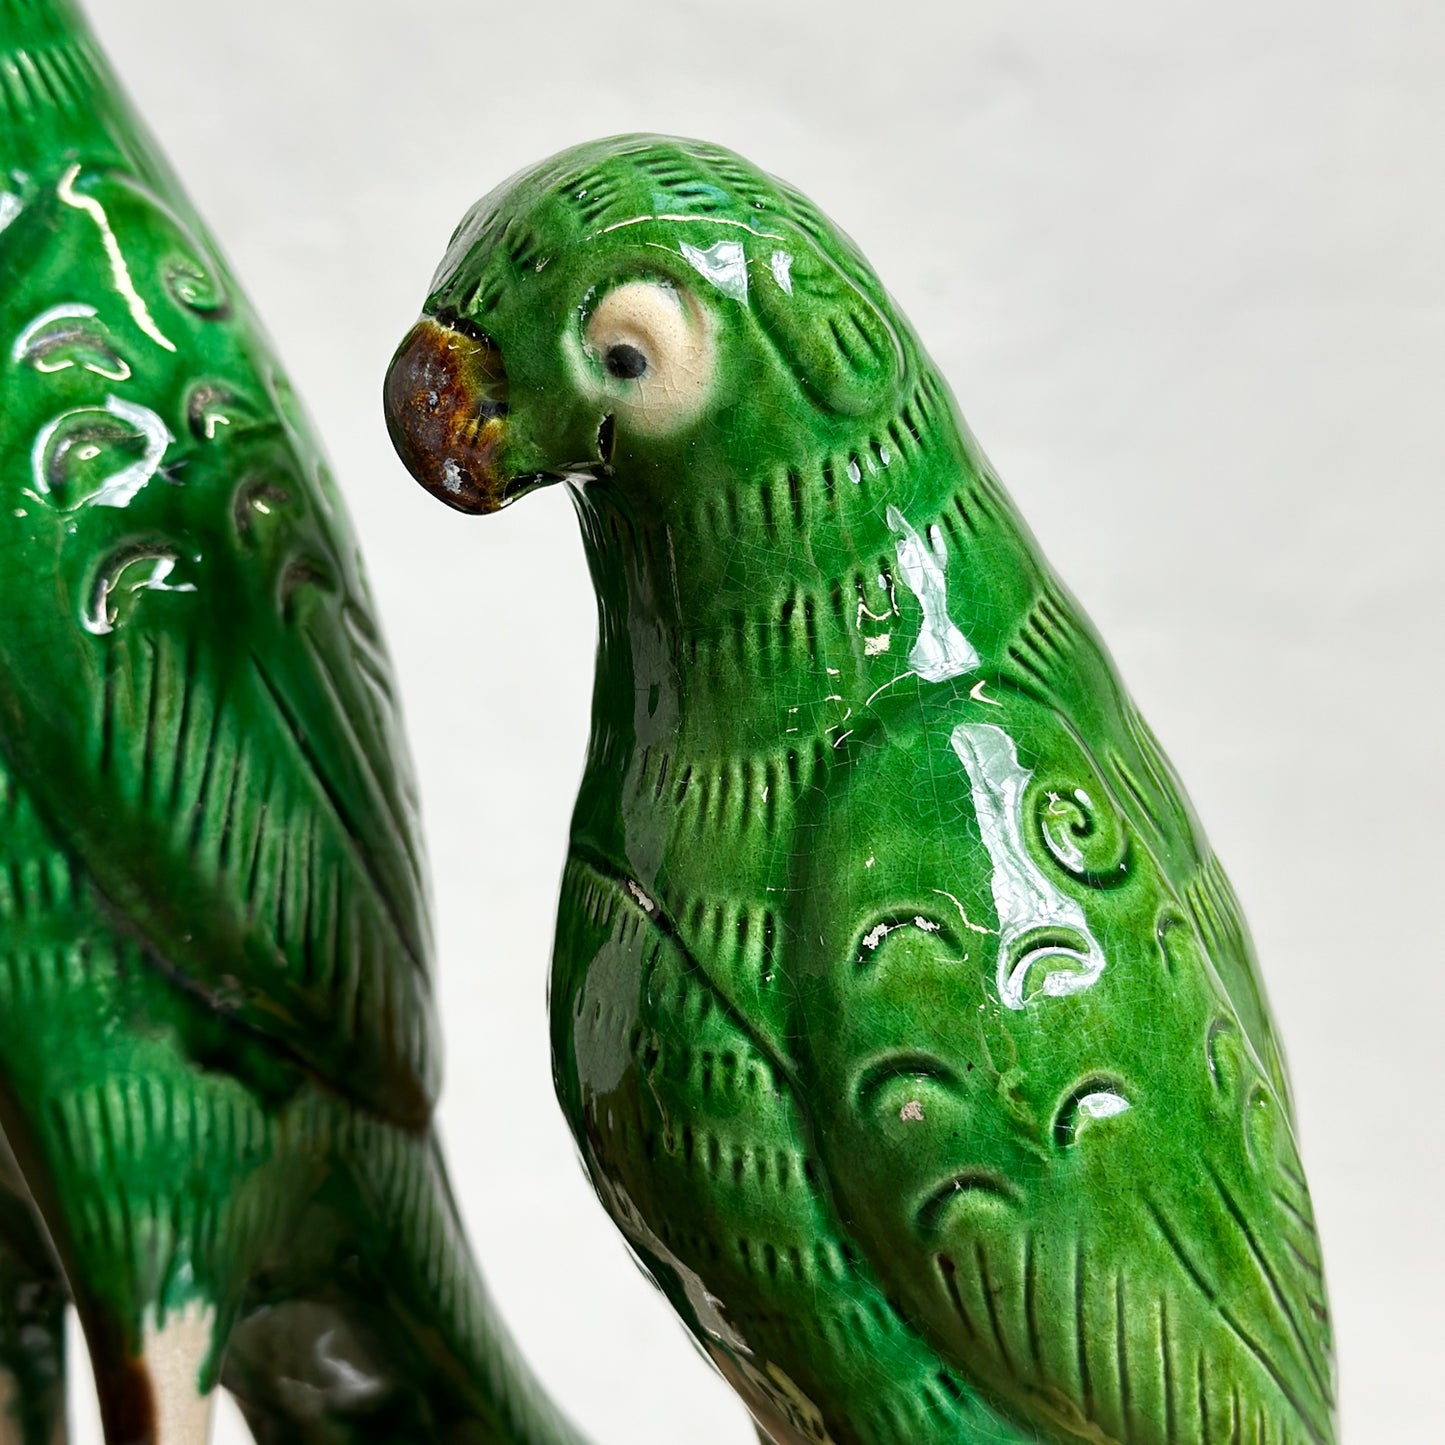 Glazed Porcelain Parrot